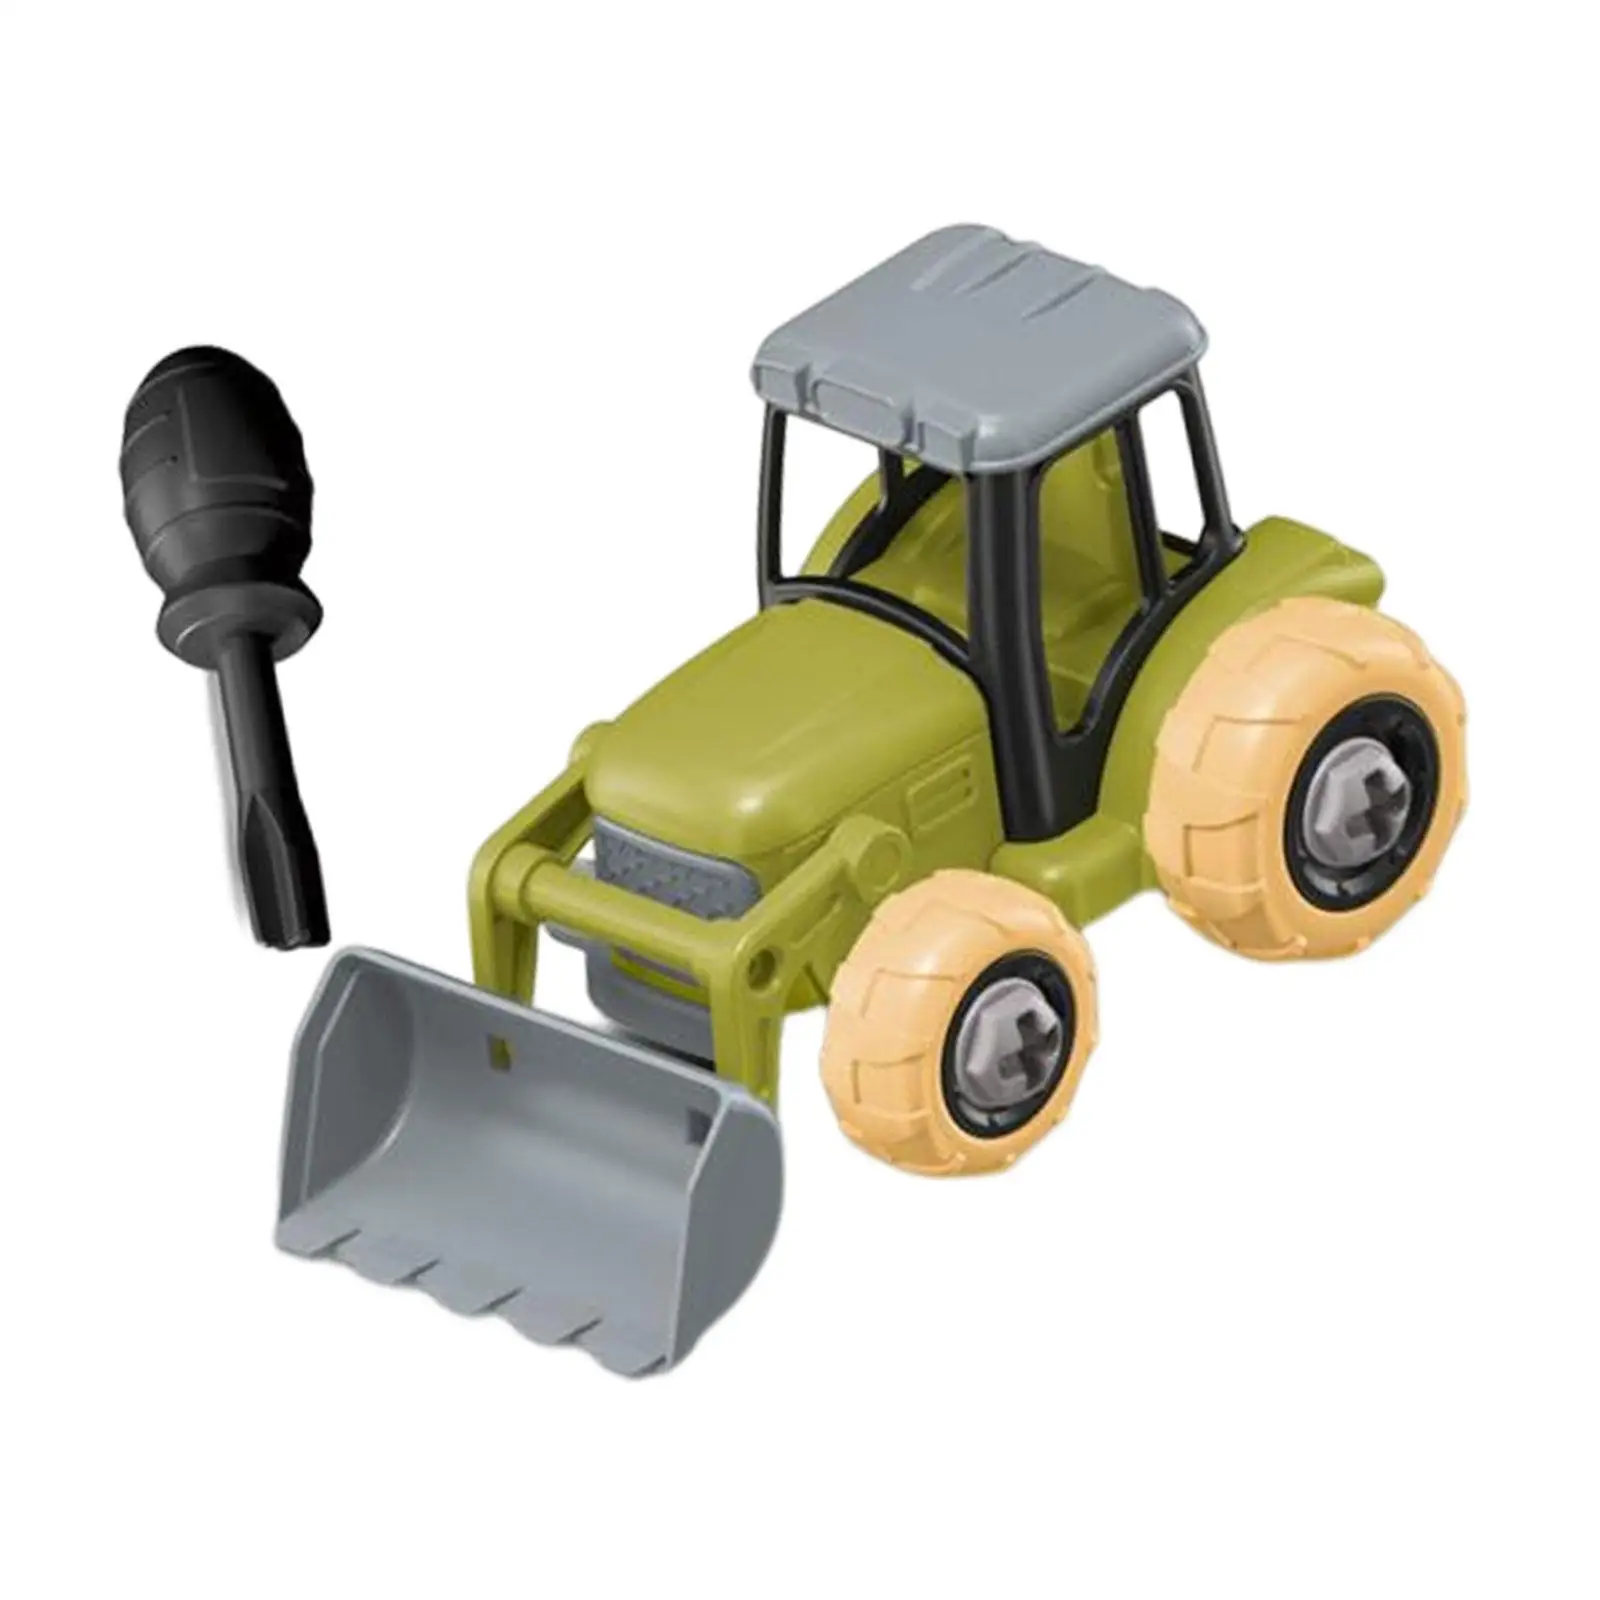 

Take Apart Construction Vehicles ,DIY Assemble Toys Age 3 4 5